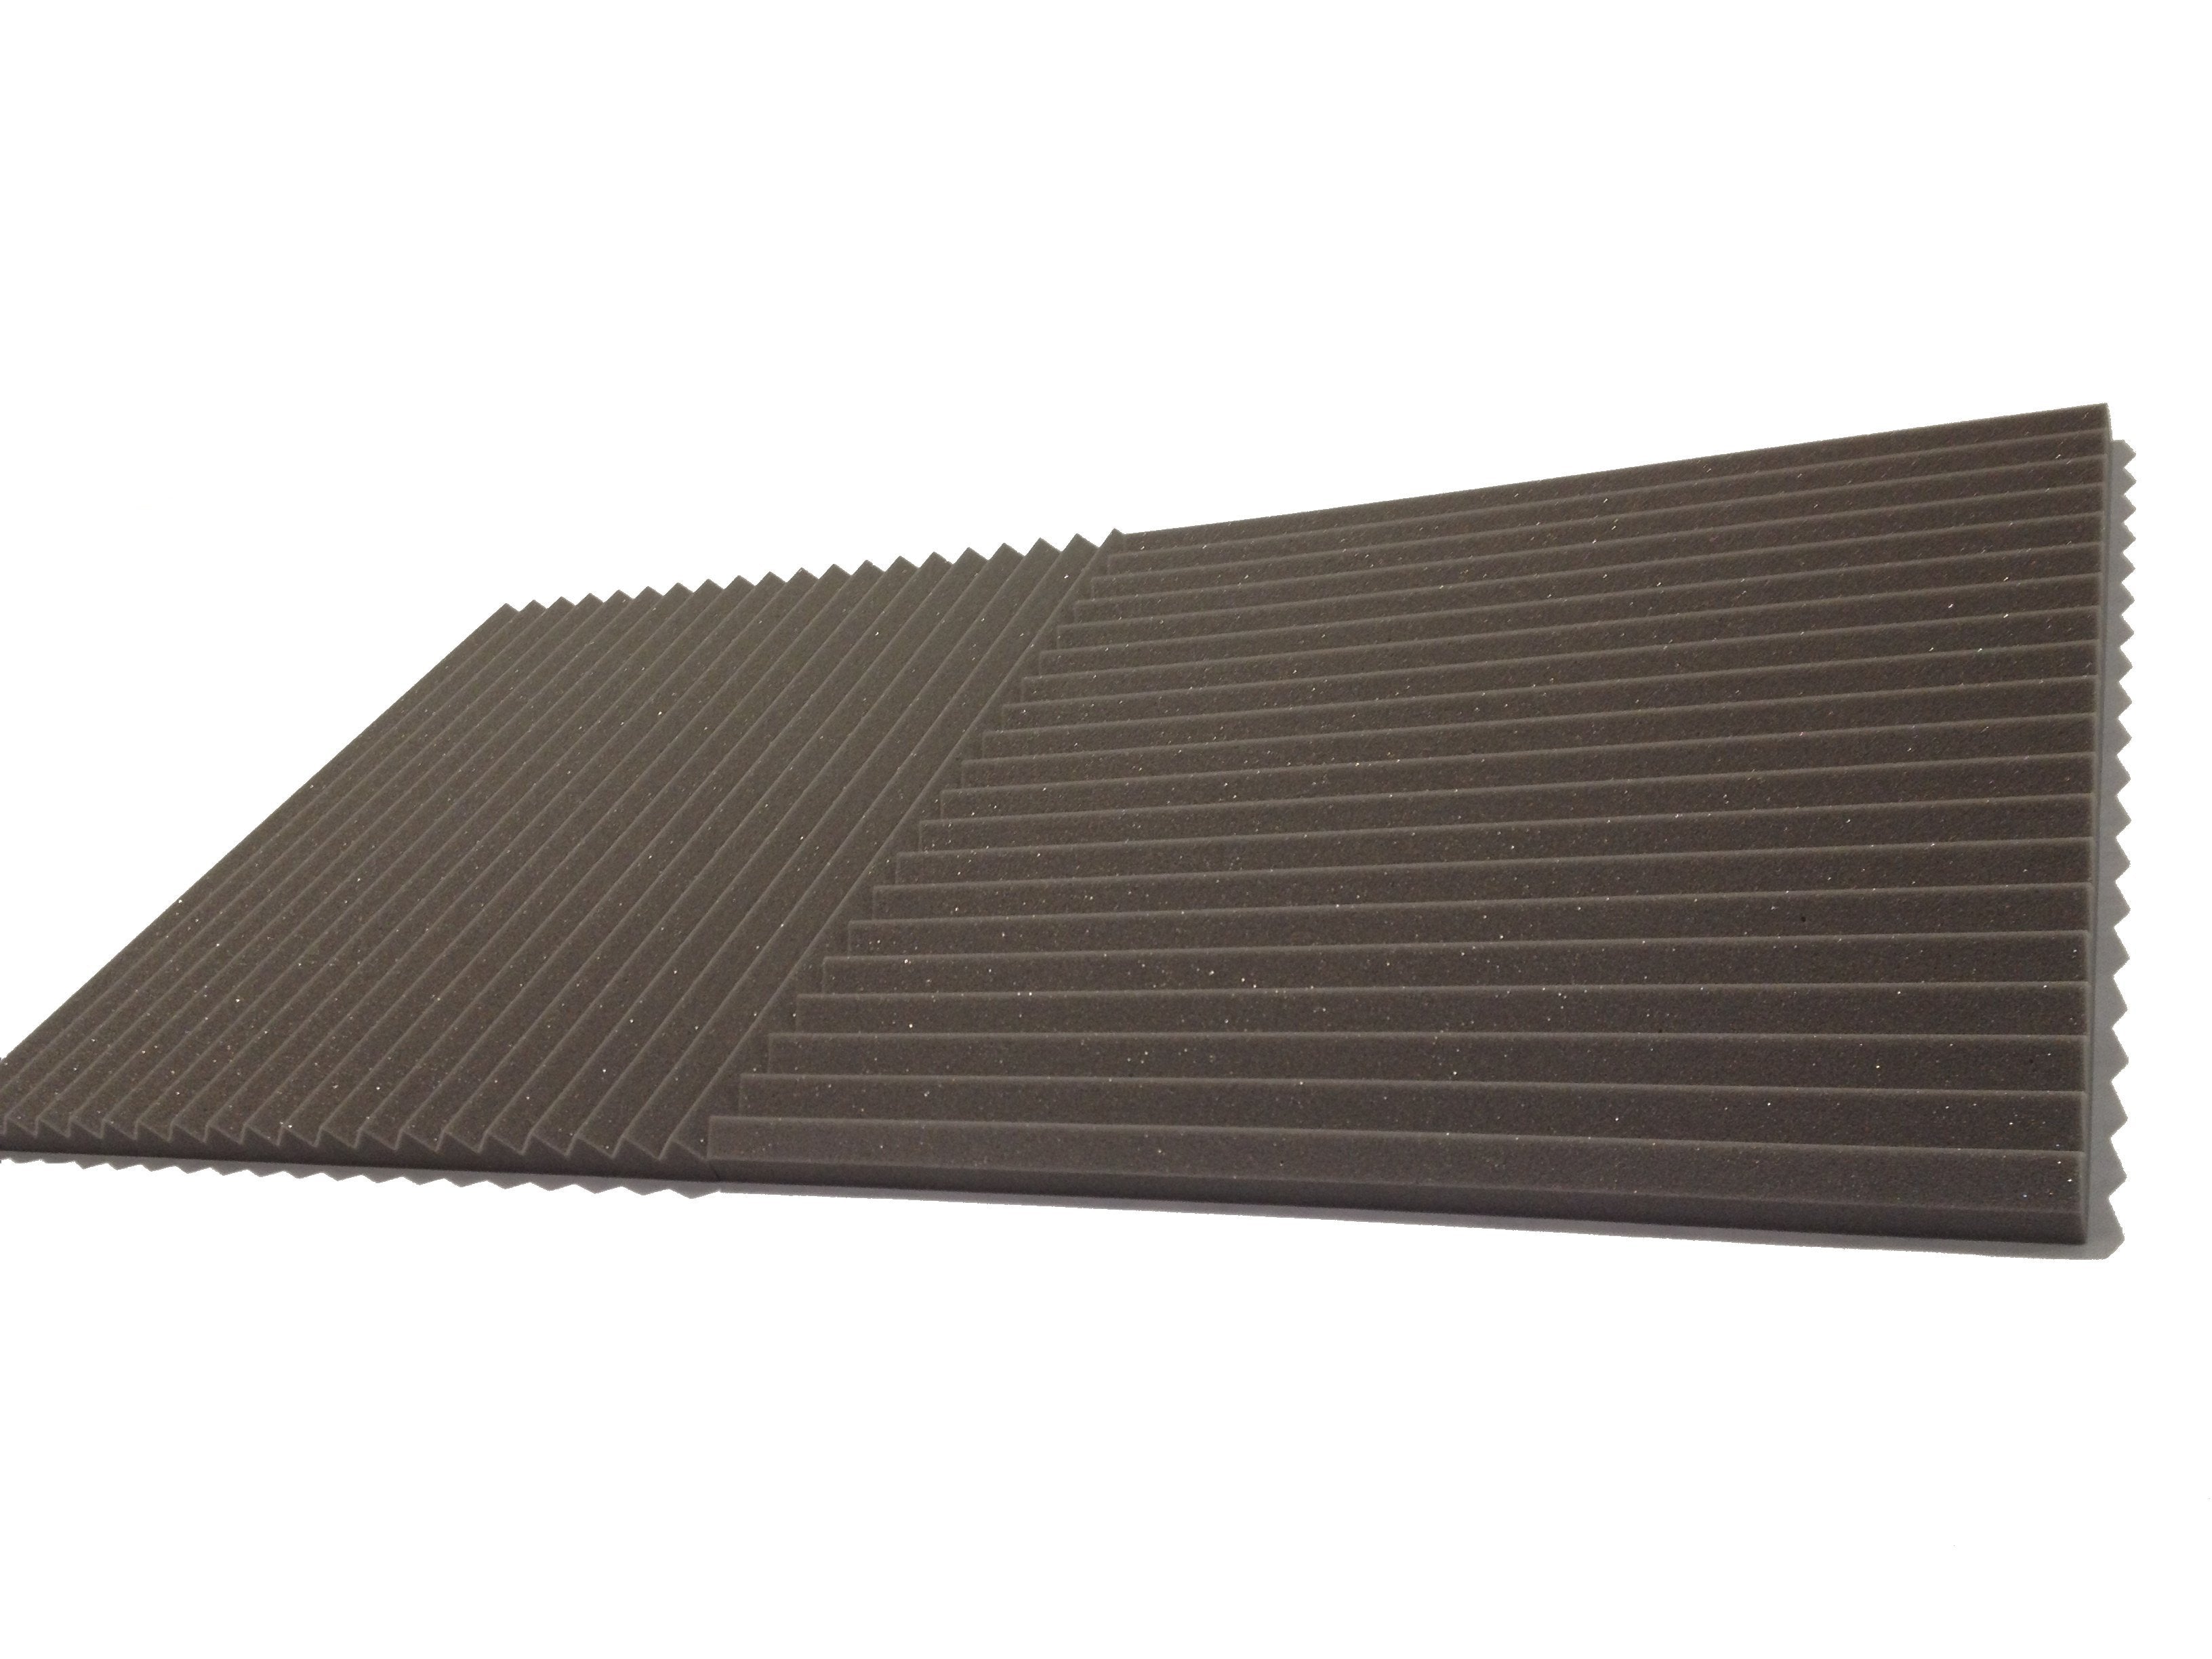 Wedge 30" Acoustic Studio Foam Tile Kit - Advanced Acoustics